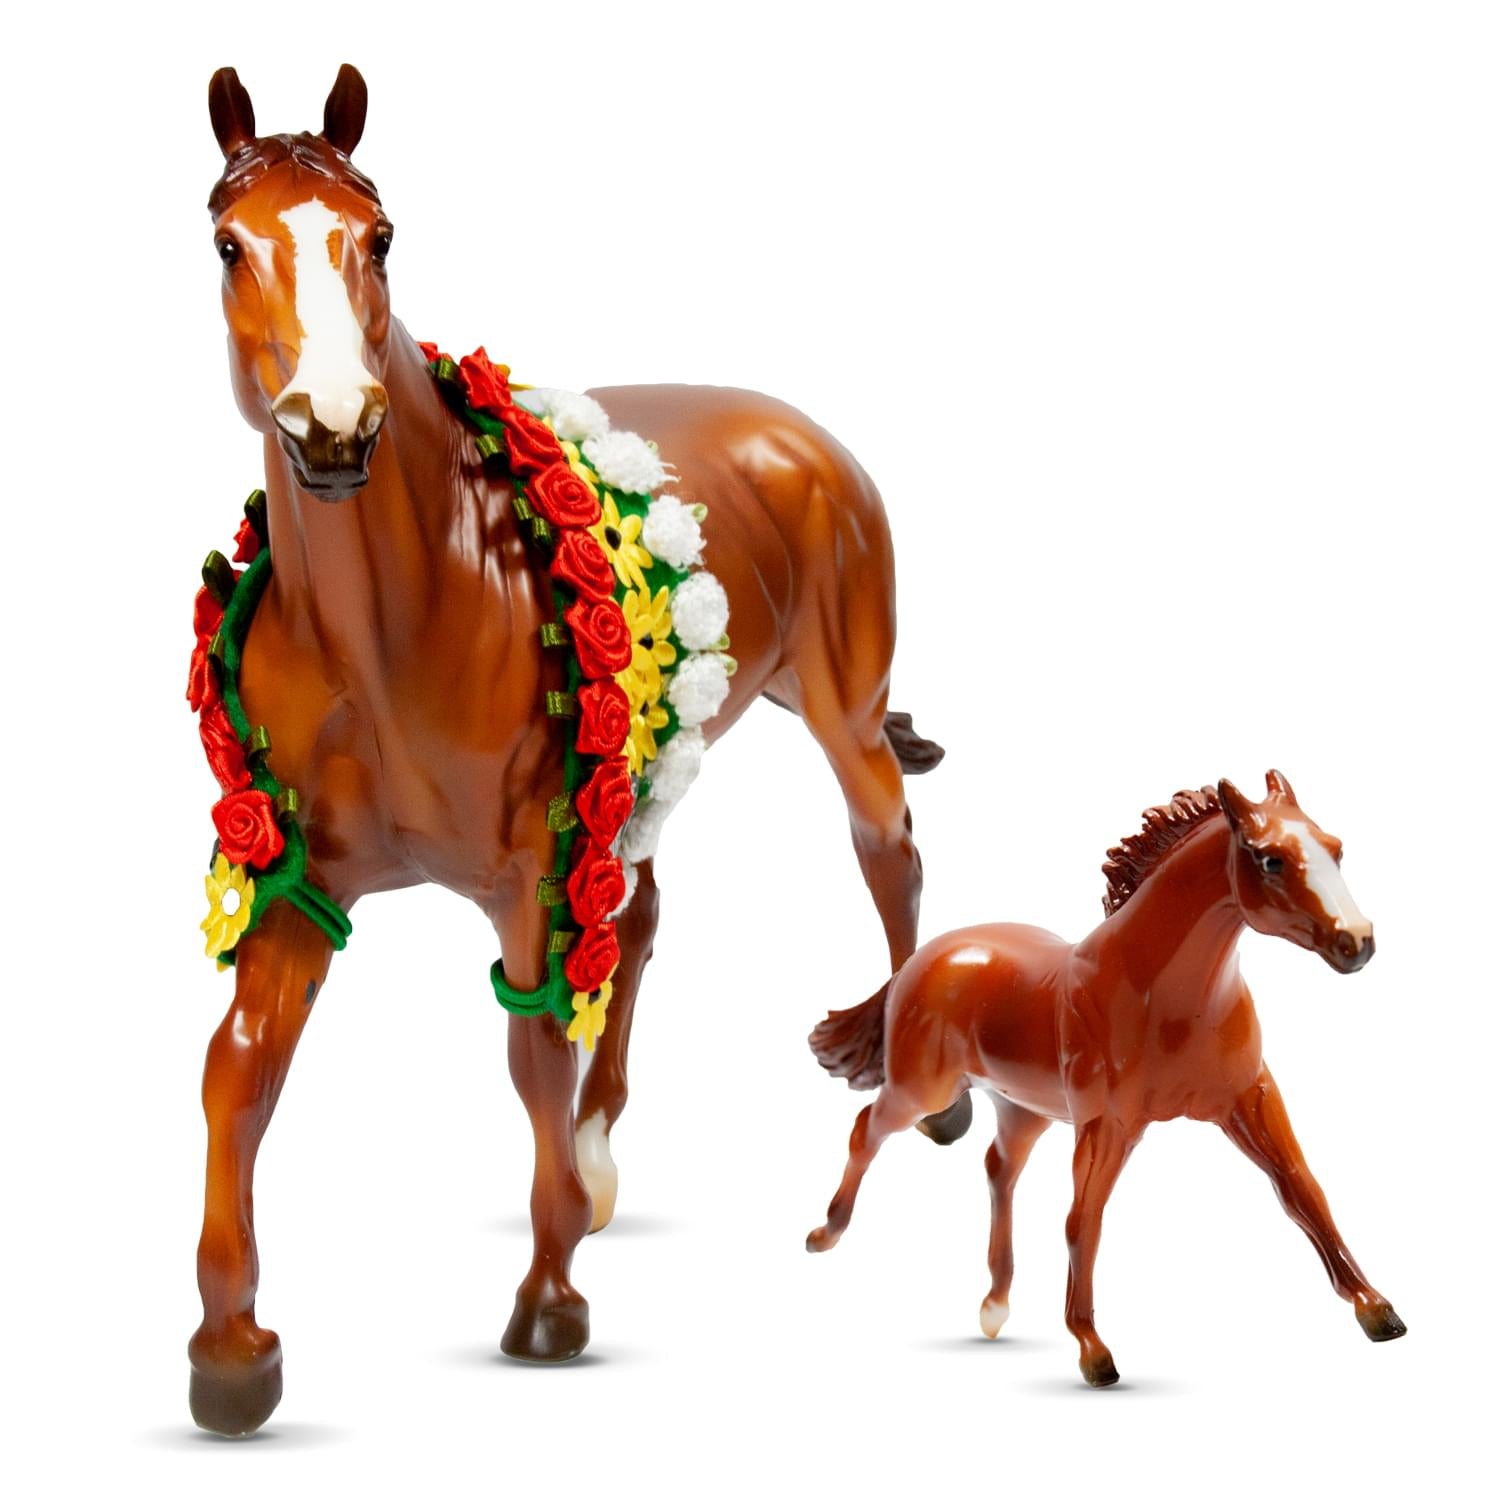 Breyer Justify Horse Model Set | Includes Traditional & Stablemates Models